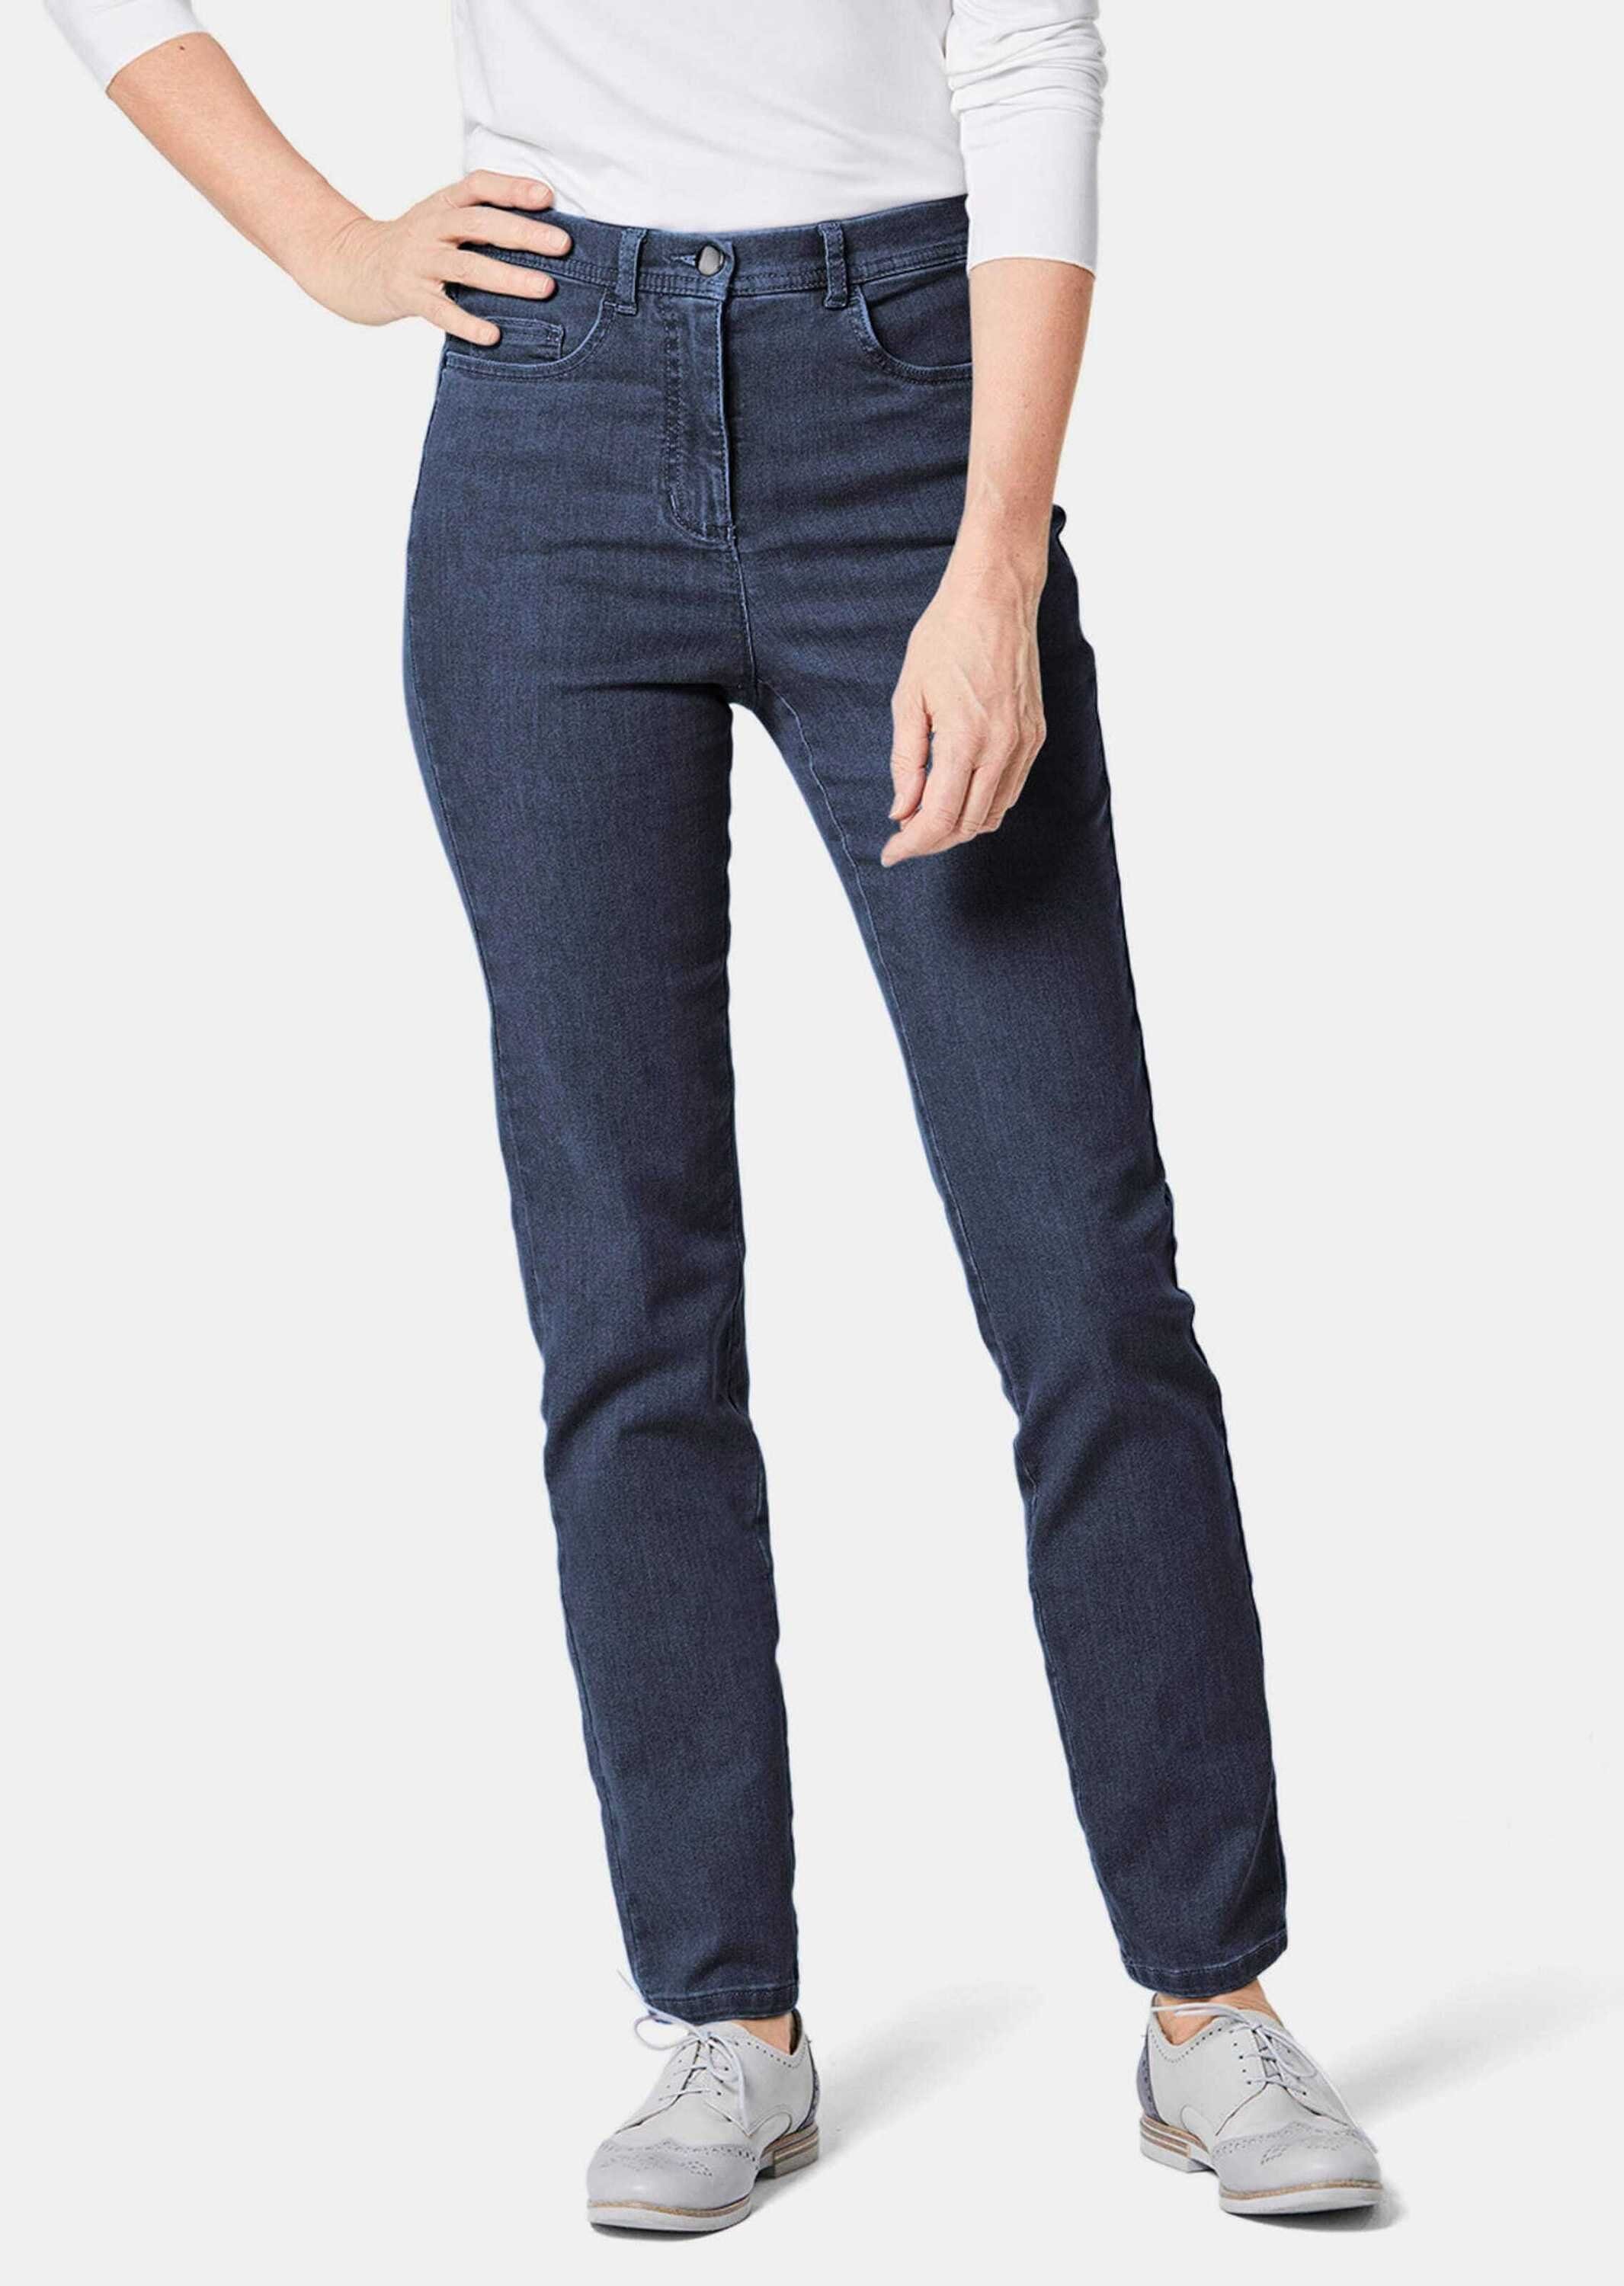 GOLDNER Bequeme Jeans Kurzgröße: Bequeme High-Stretch-Jeanshose dunkelblau